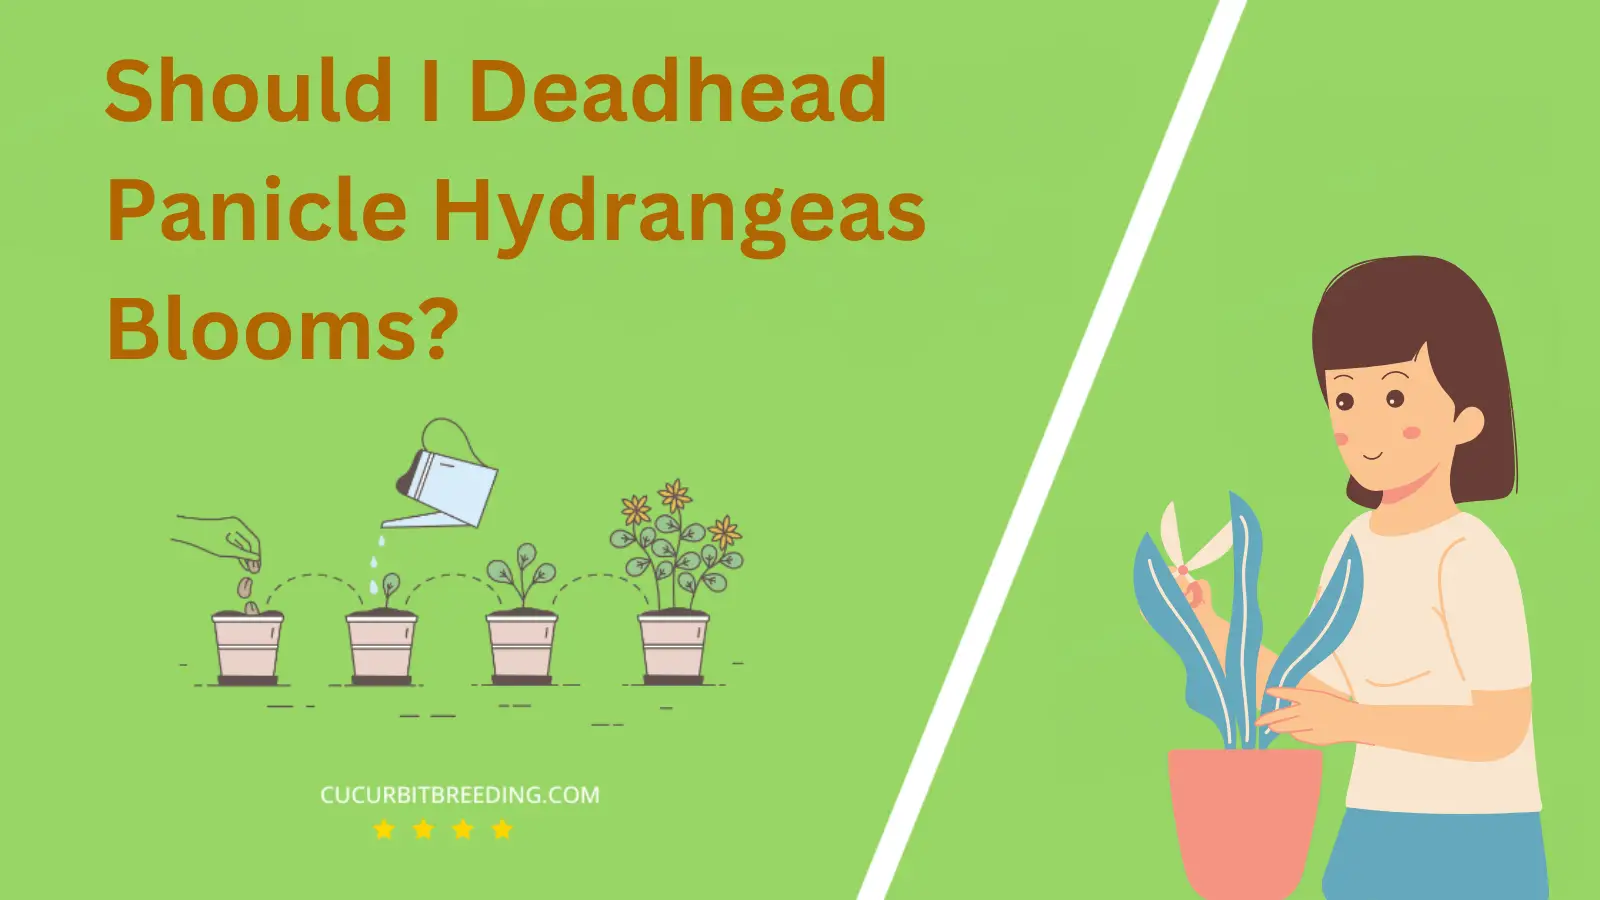 Should I Deadhead Panicle Hydrangeas Blooms?